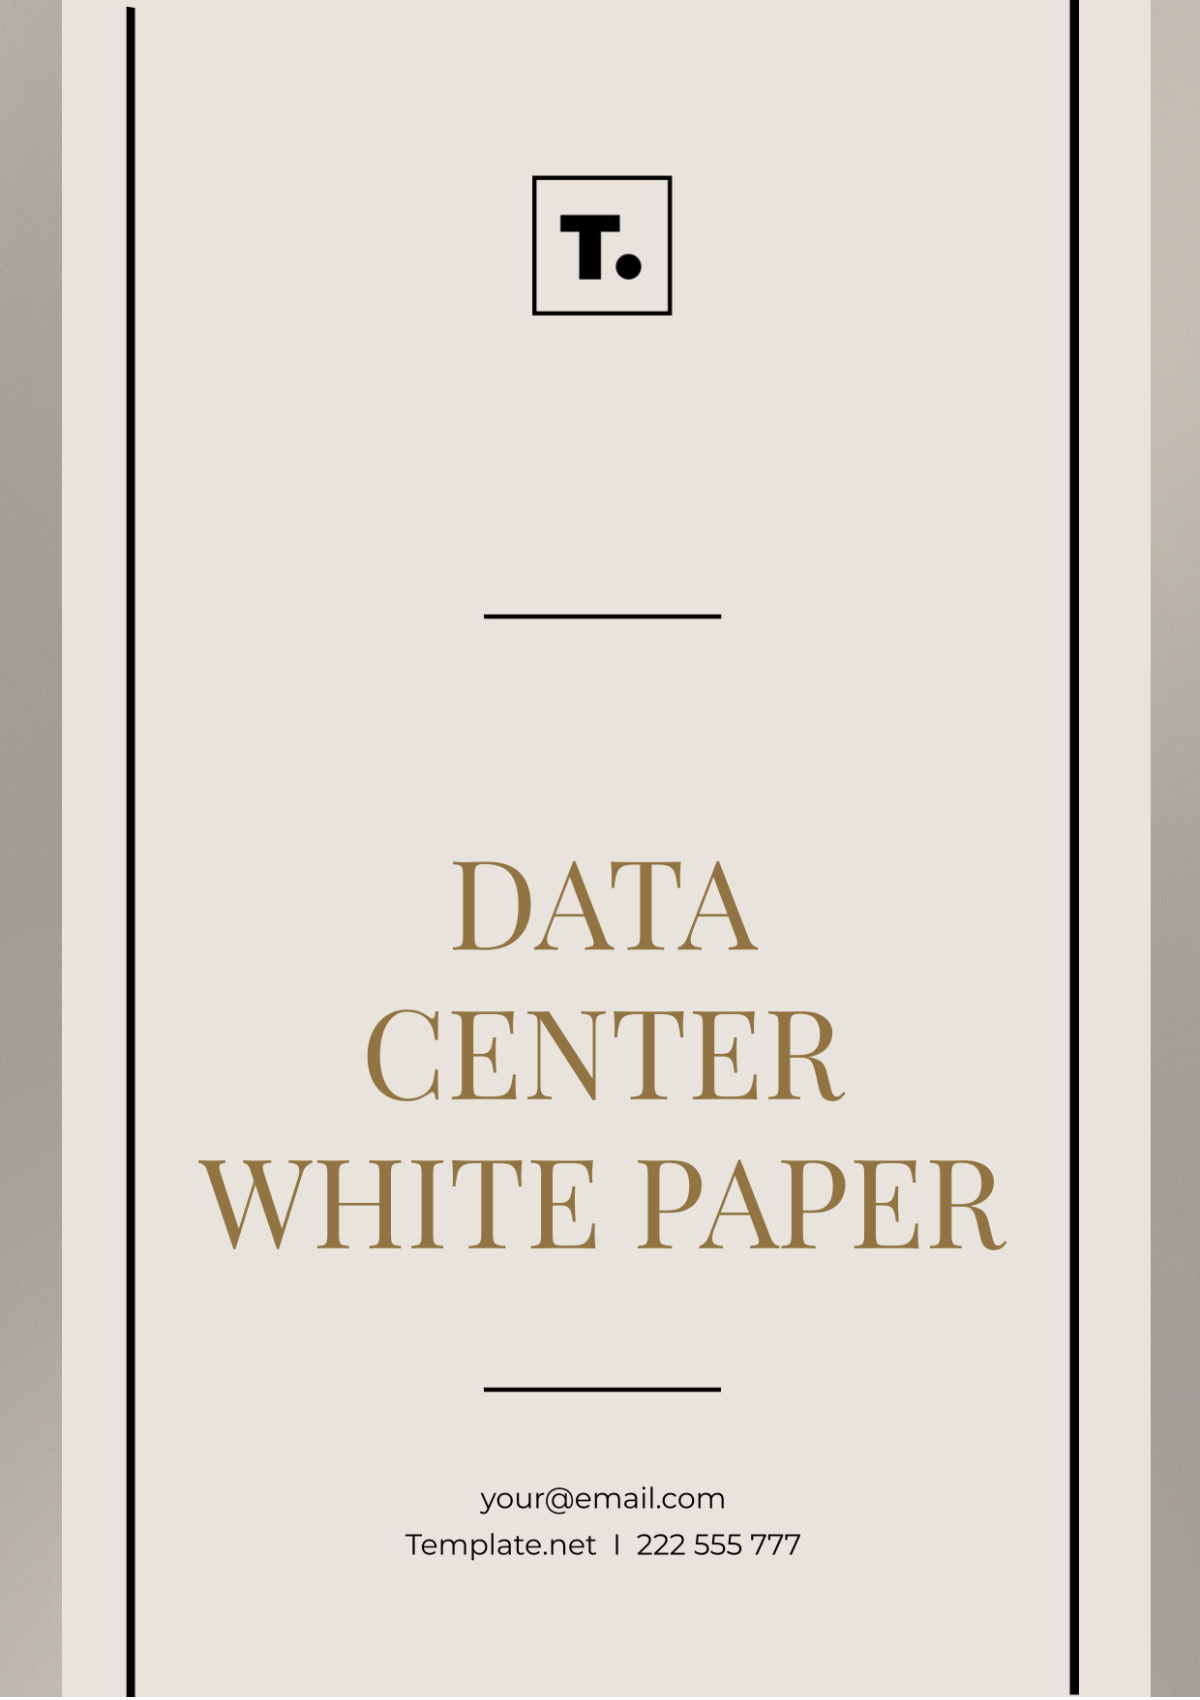 Data Center White Paper Template